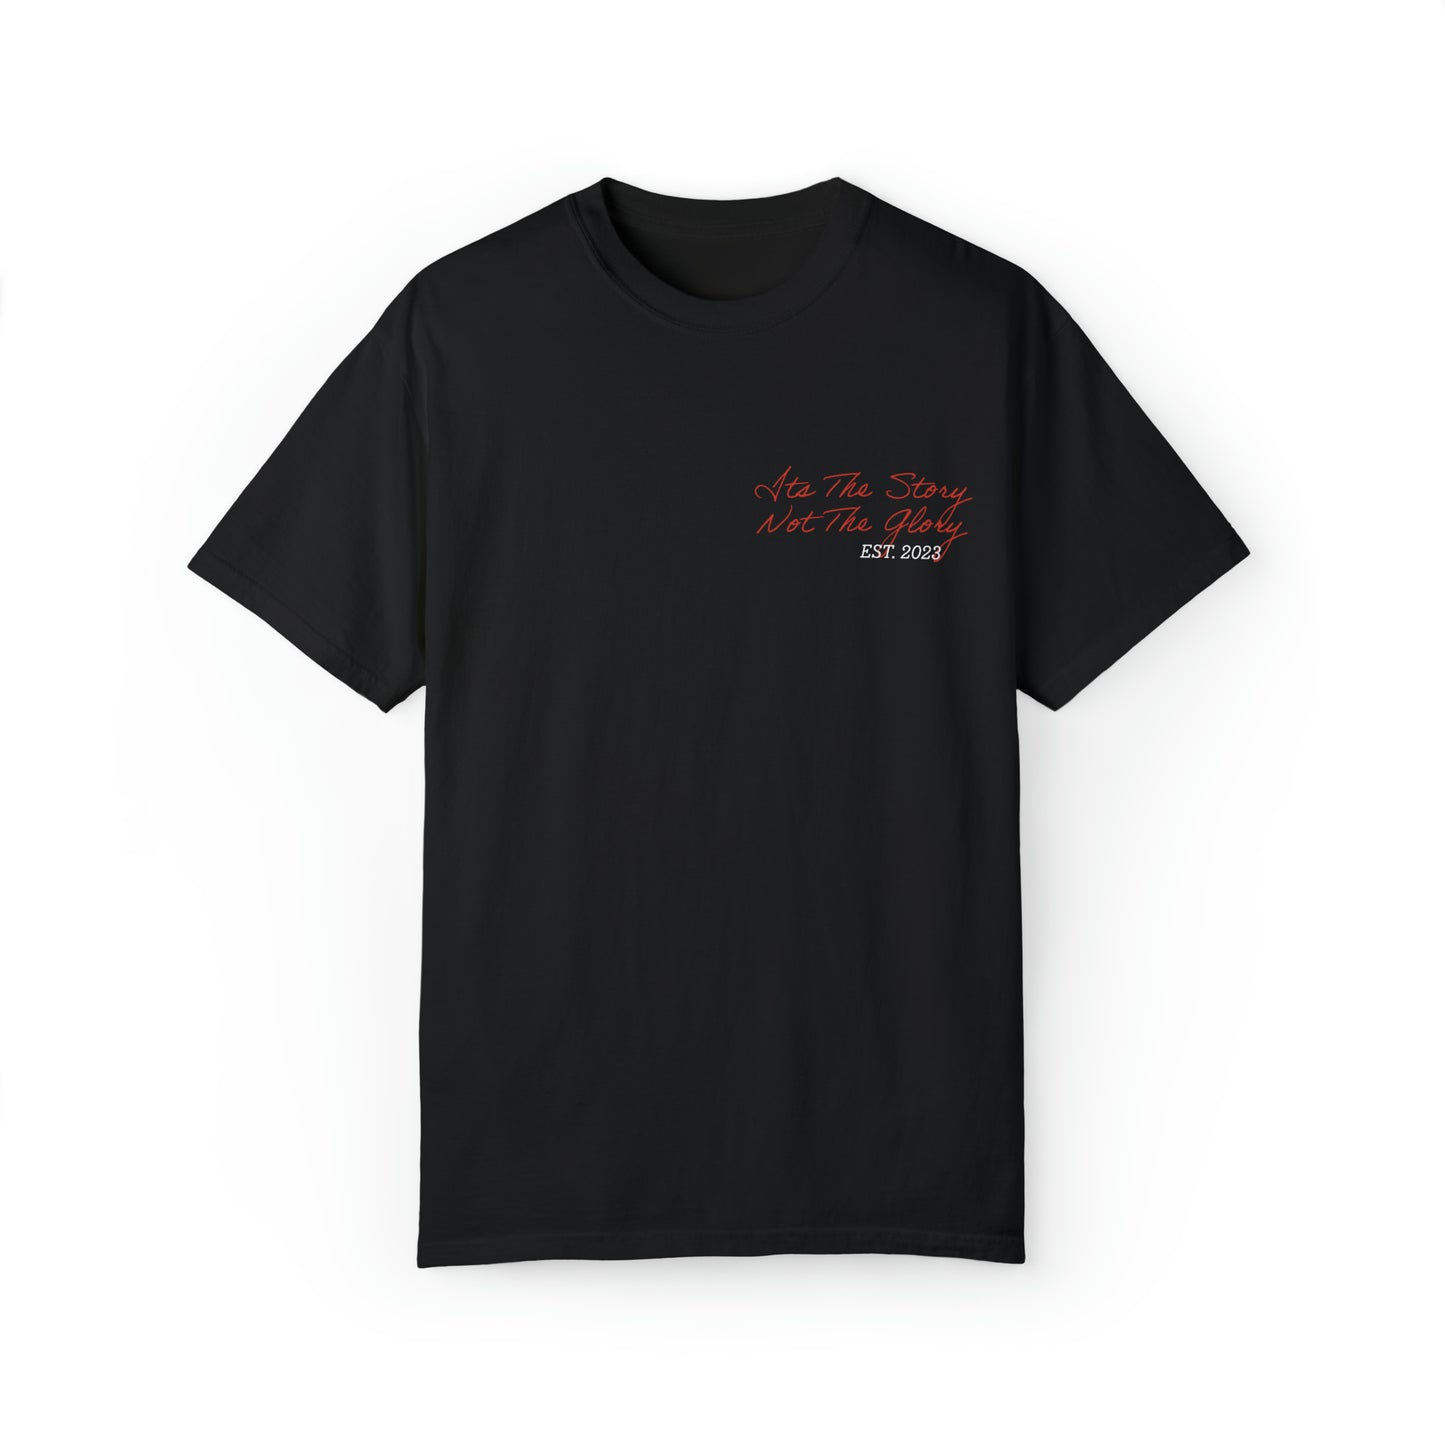 Casual Black T-Shirt w/ Text